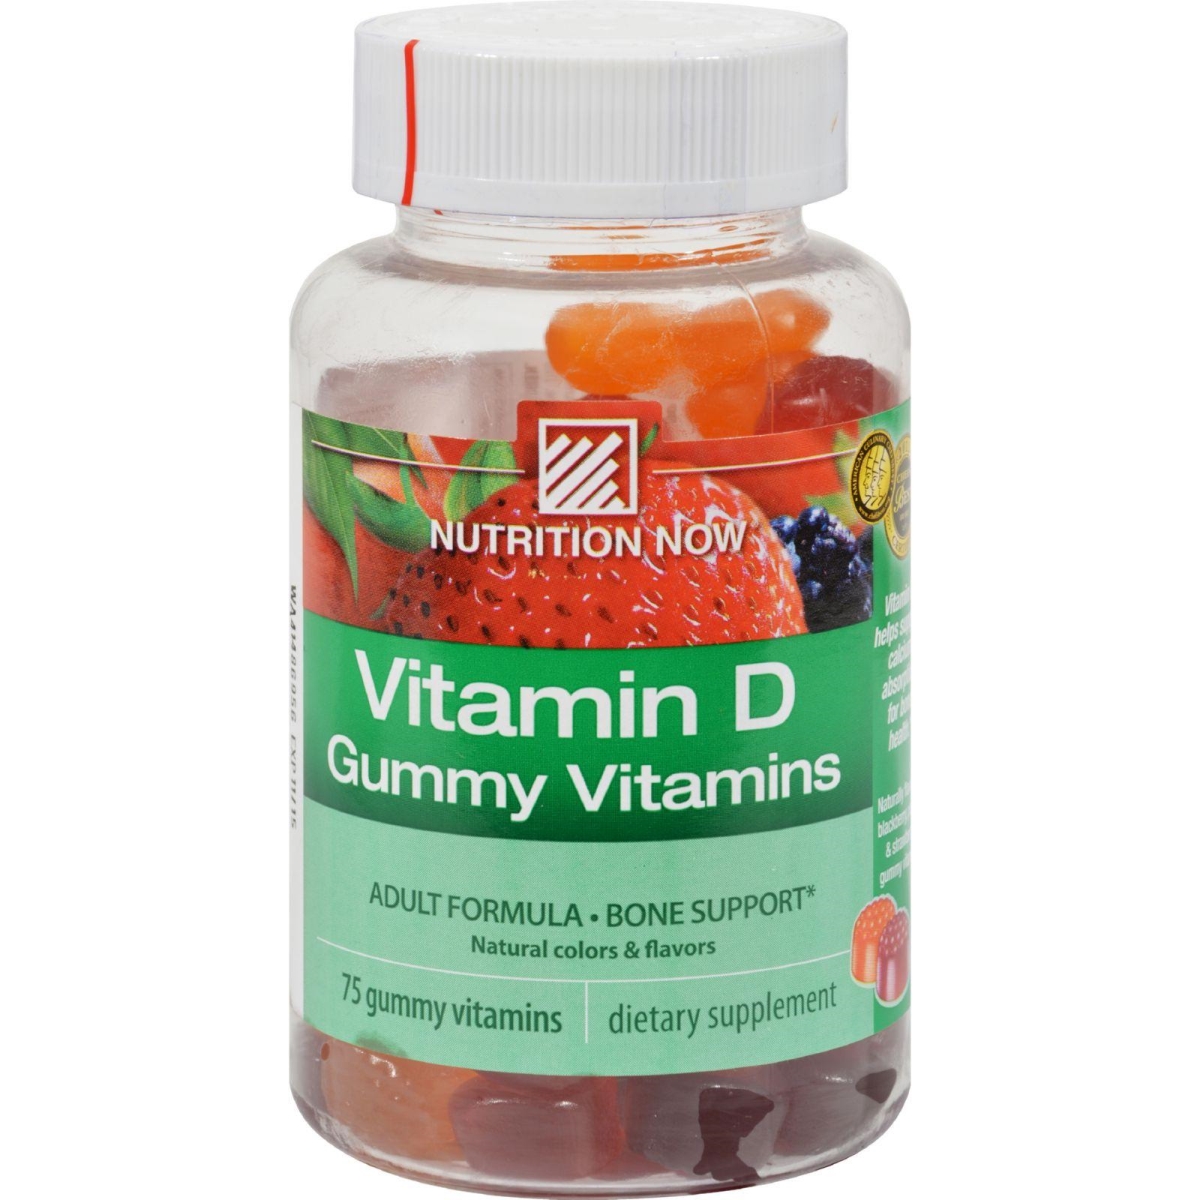 Hg0952341 Vitamin D Gummy Vitamins - 75 Gummies